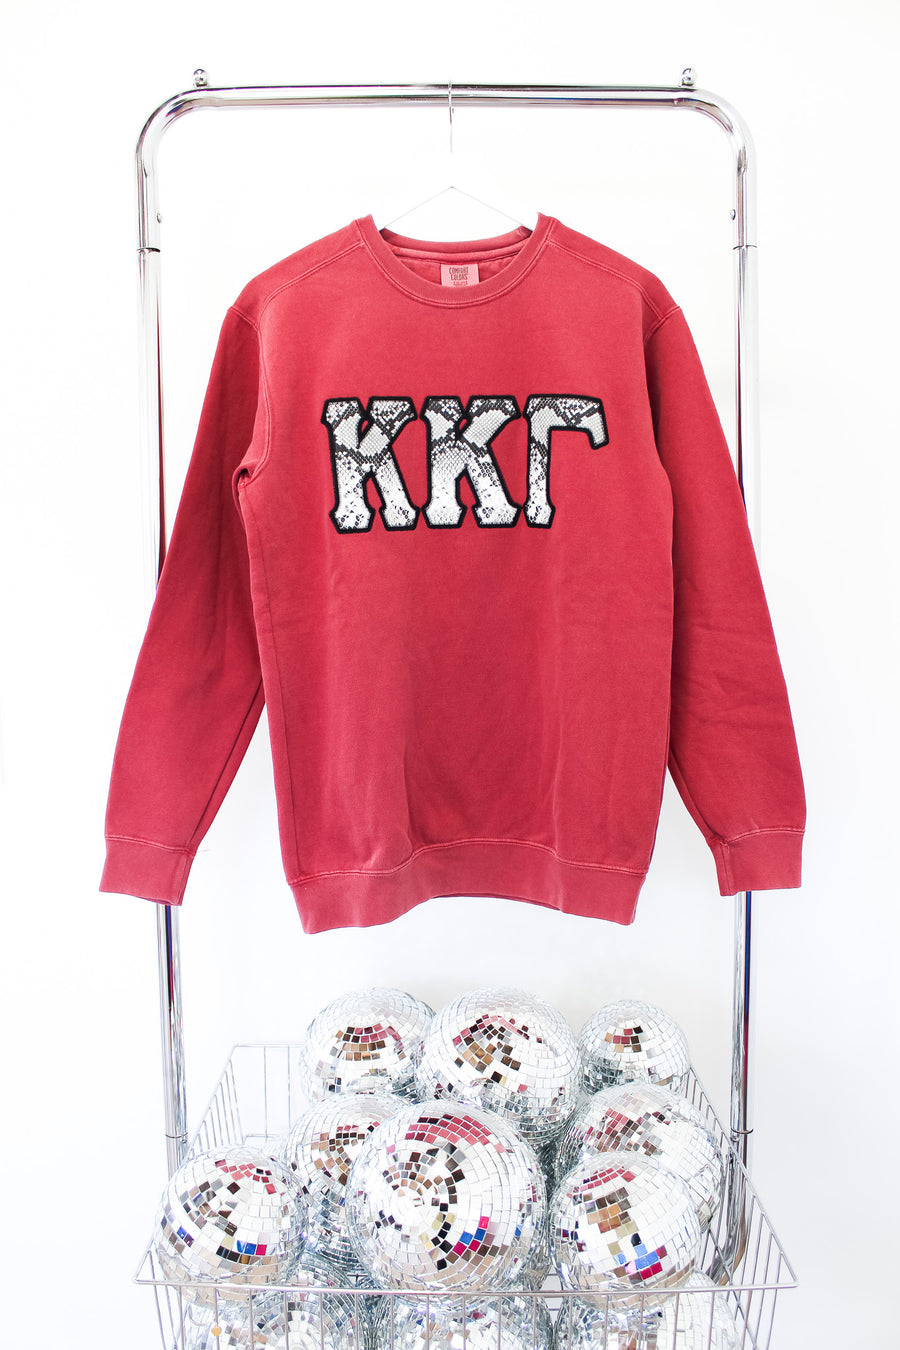 Kappa Kappa Gamma Embroidered Letter Crew - SM CRIMSON